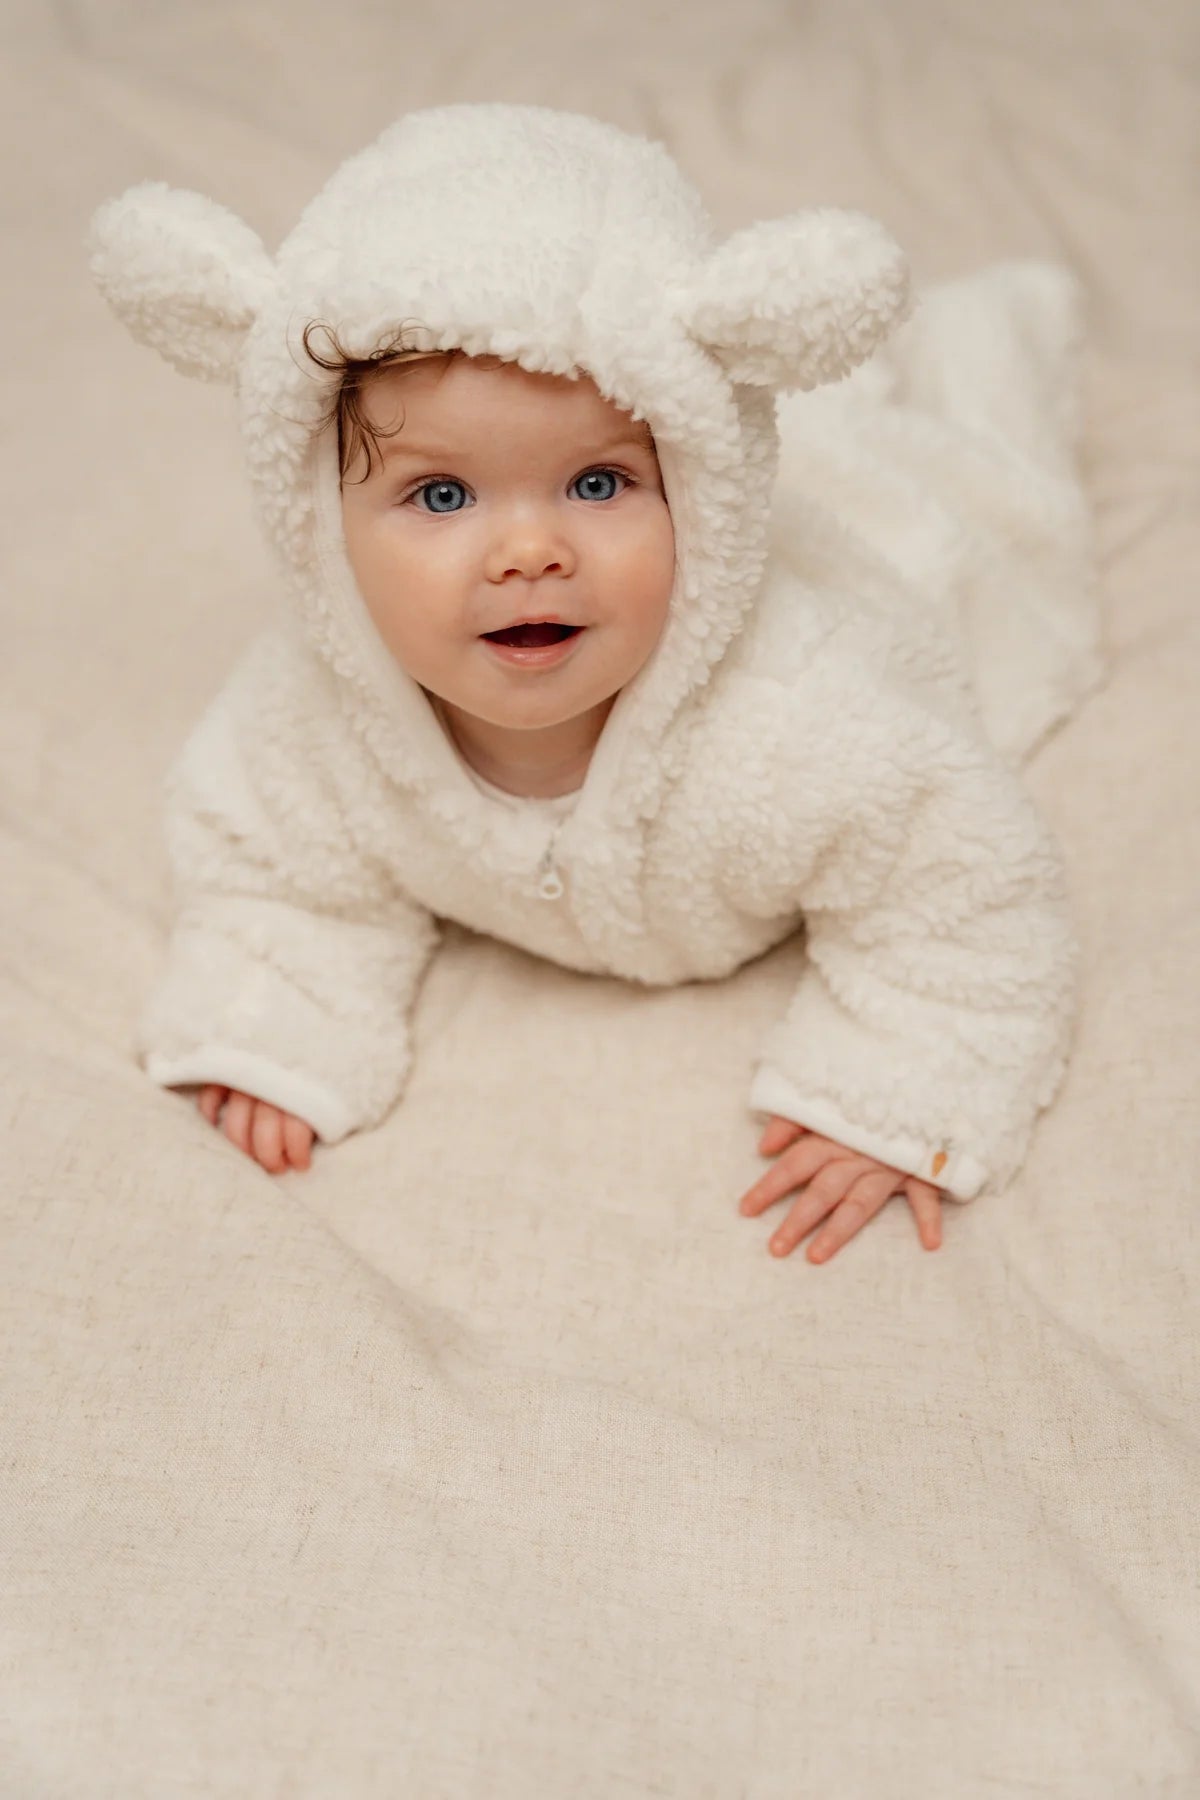 Little Dutch White Teddy Baby Bunny Fleece Suit (Age 1-2 Months)